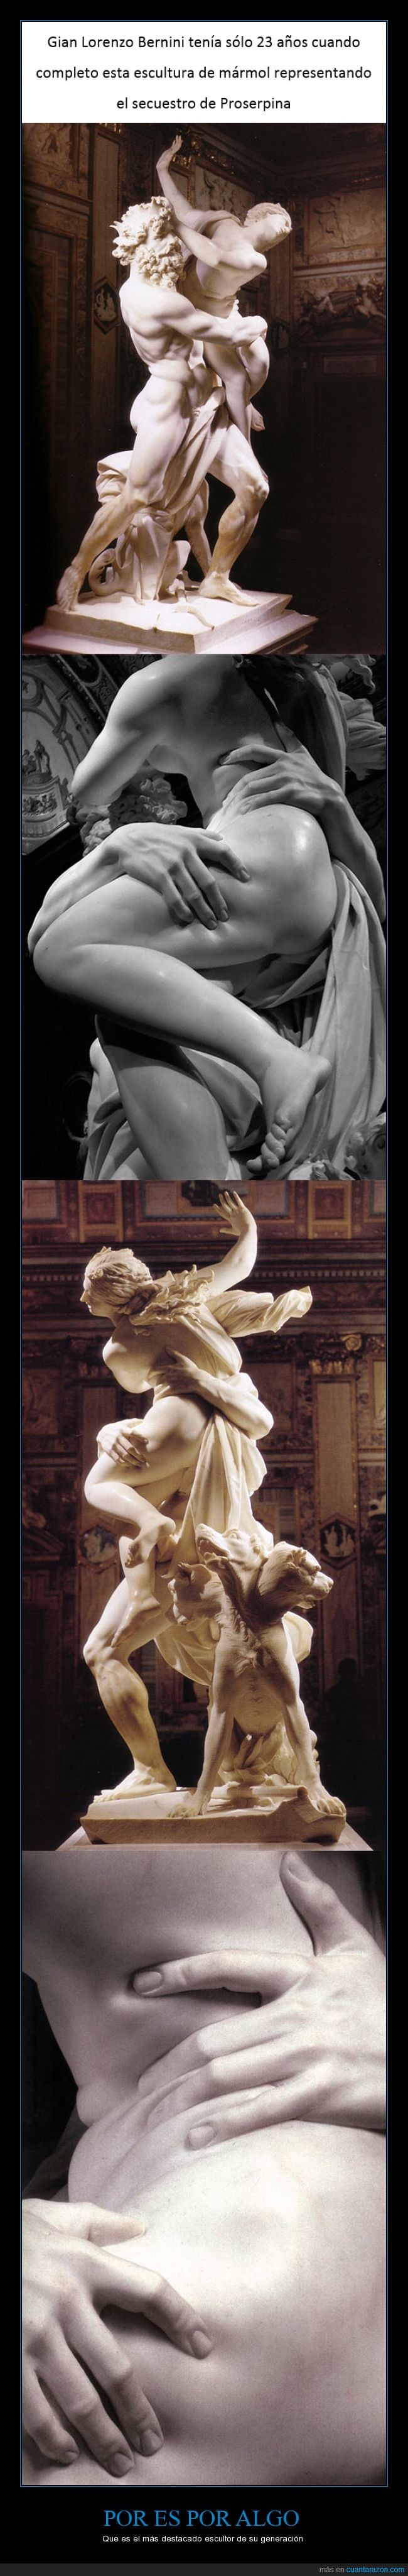 arte,Bernini,El Rapto de Proserpina,escultor,escultura,impresionante,realista